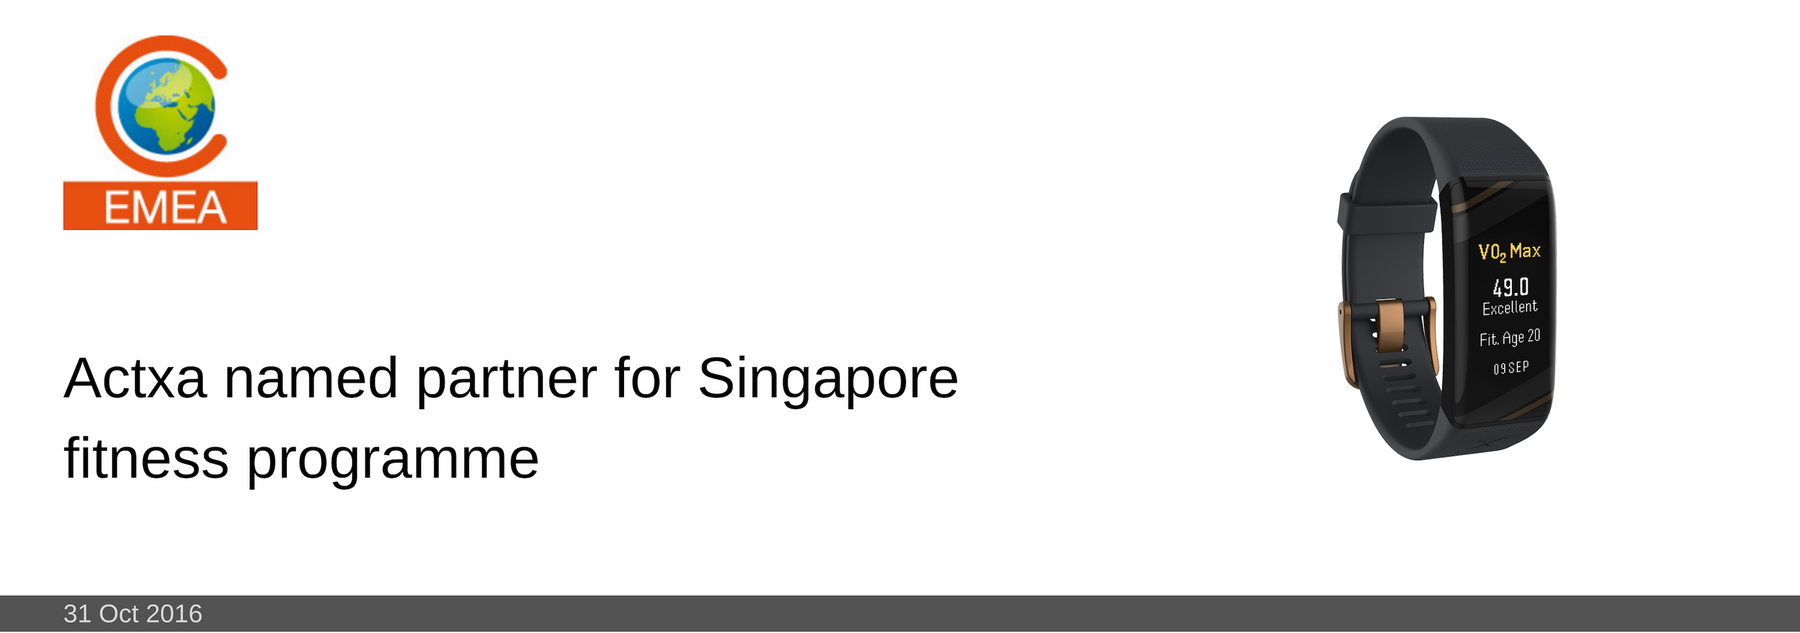 31 OCT 2016: Actxa named partner for Singapore fitness programme